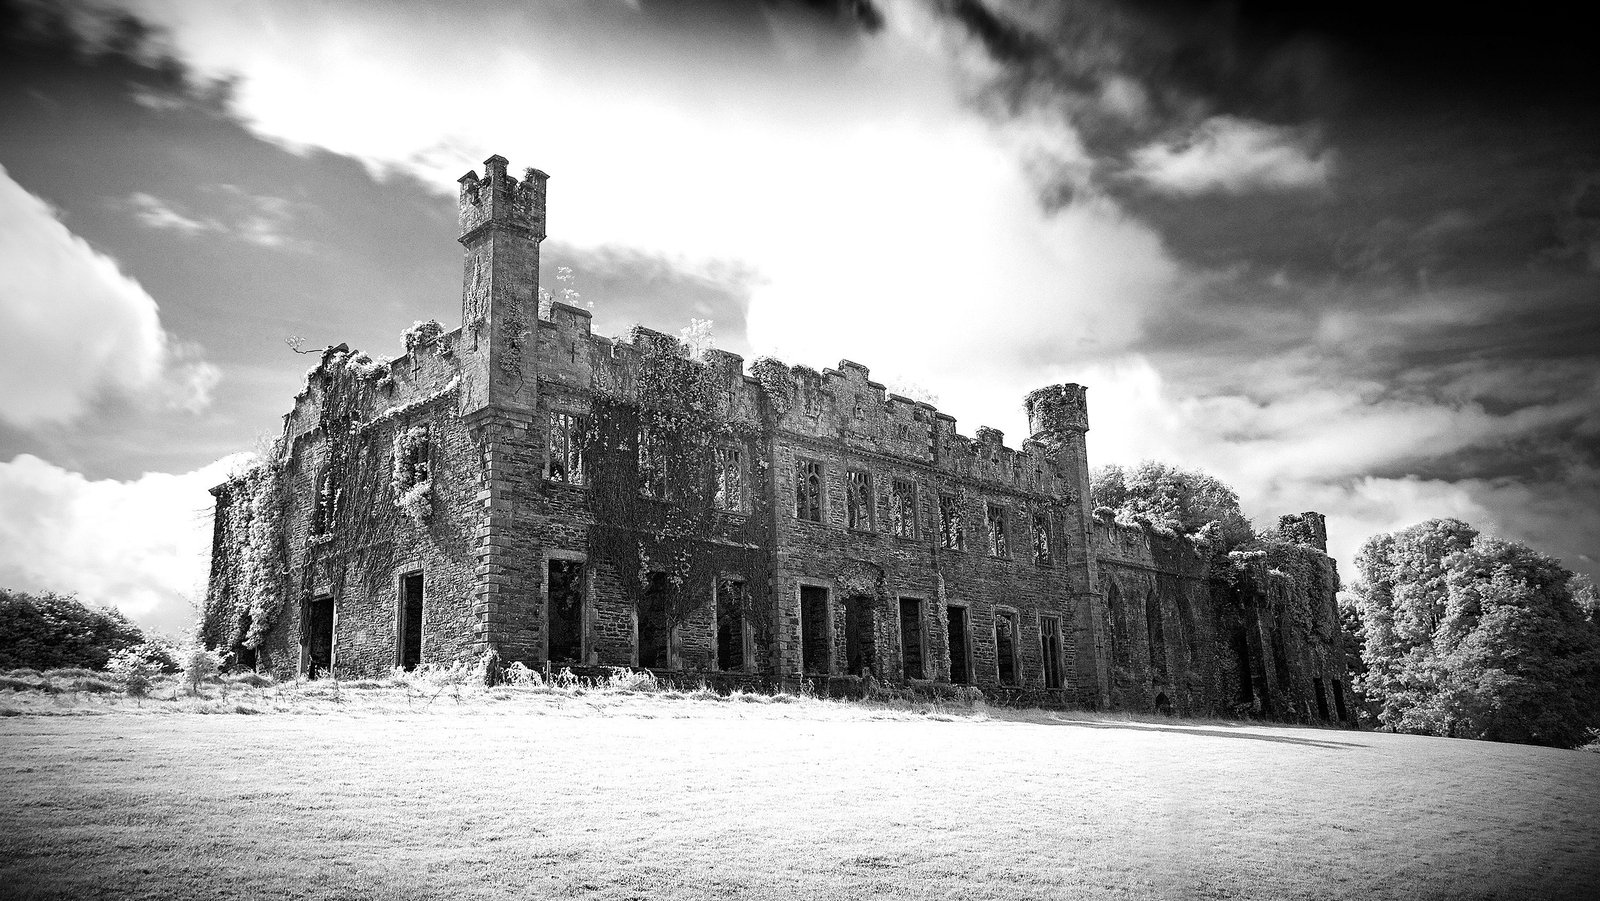 Image - The ruins of Castle Bernard, burned in June 1921